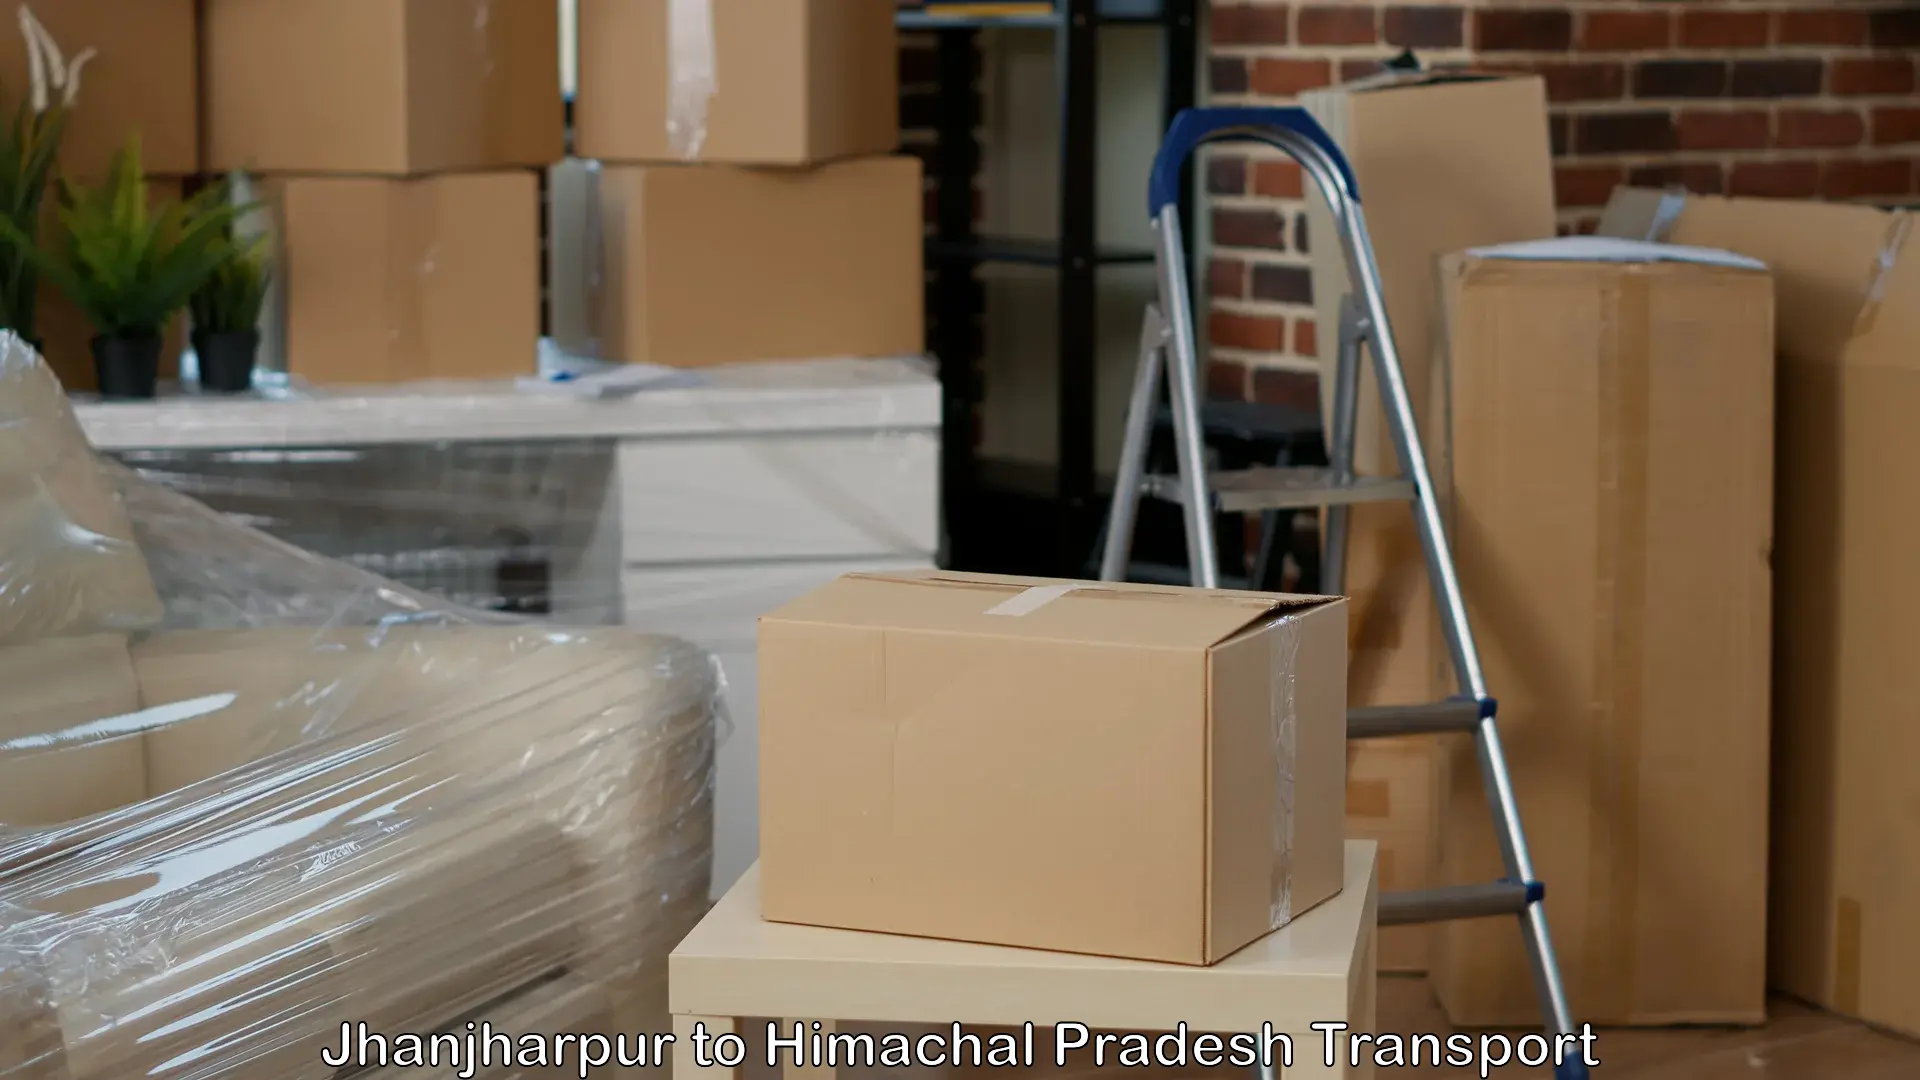 Truck transport companies in India Jhanjharpur to Sandhol